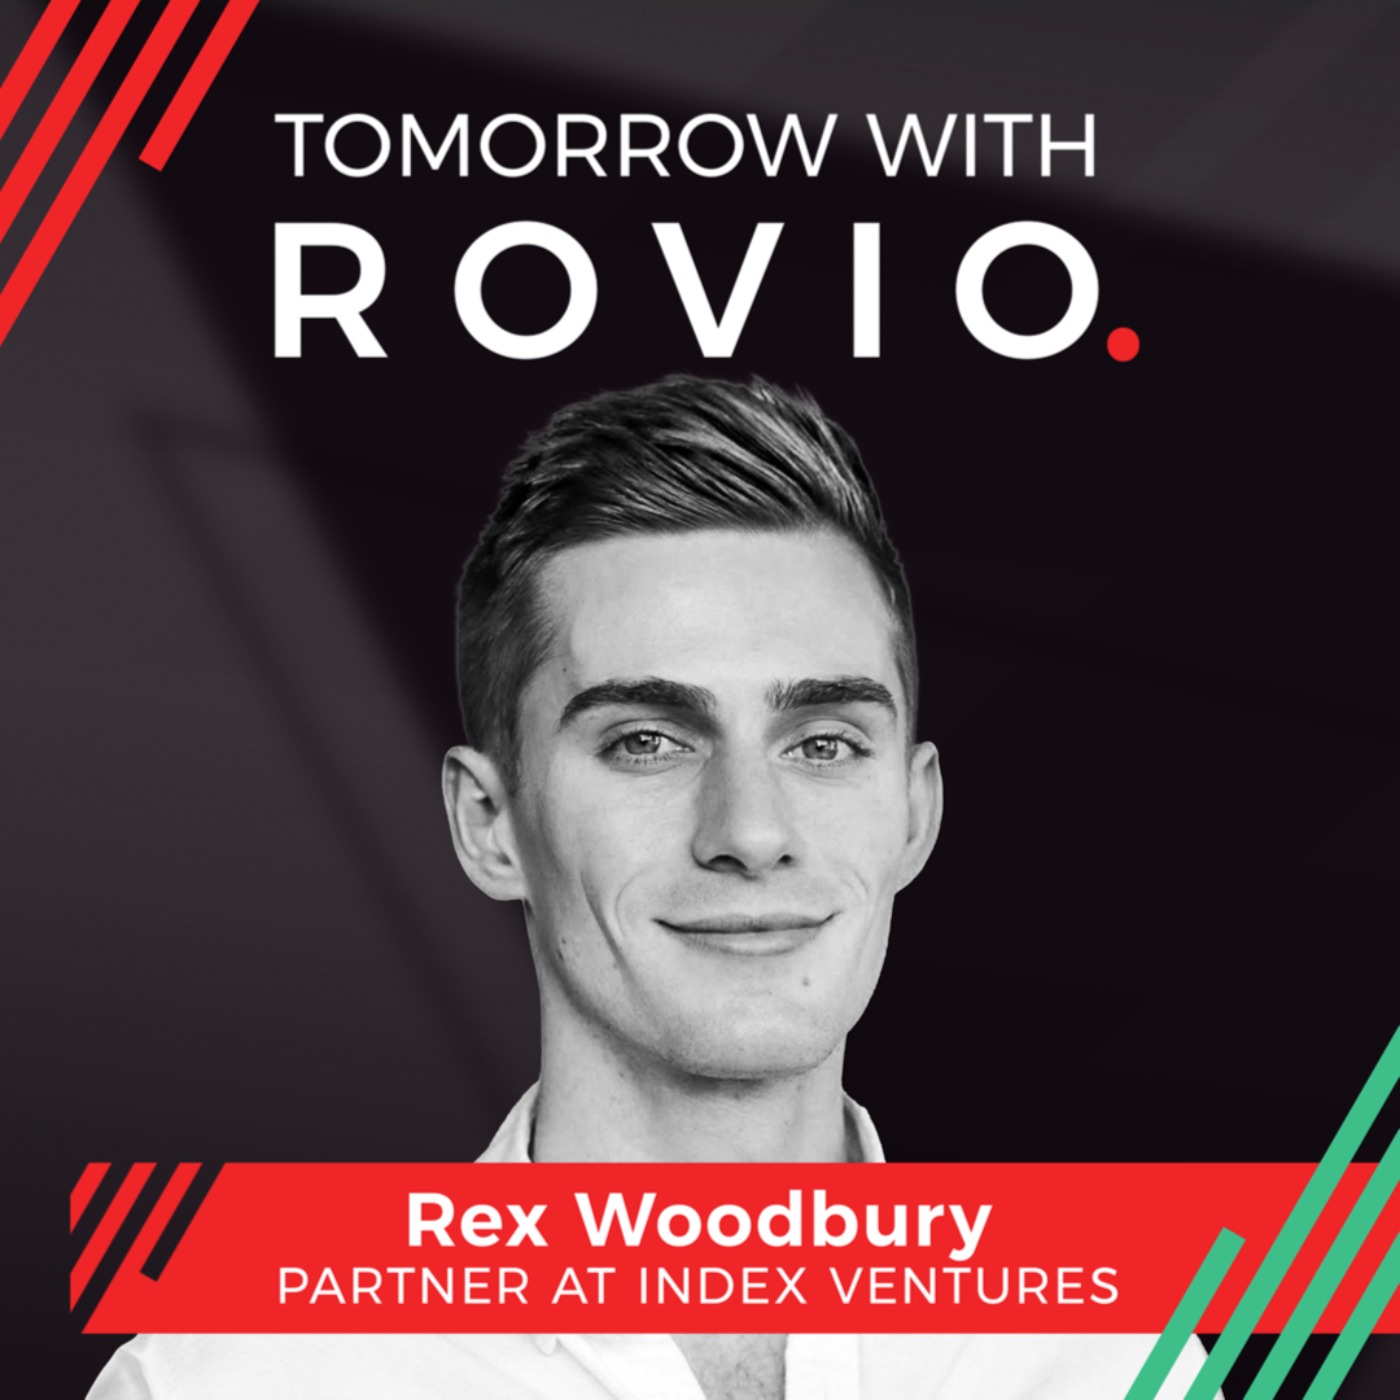 Rex Woodbury - Partner at Index Ventures